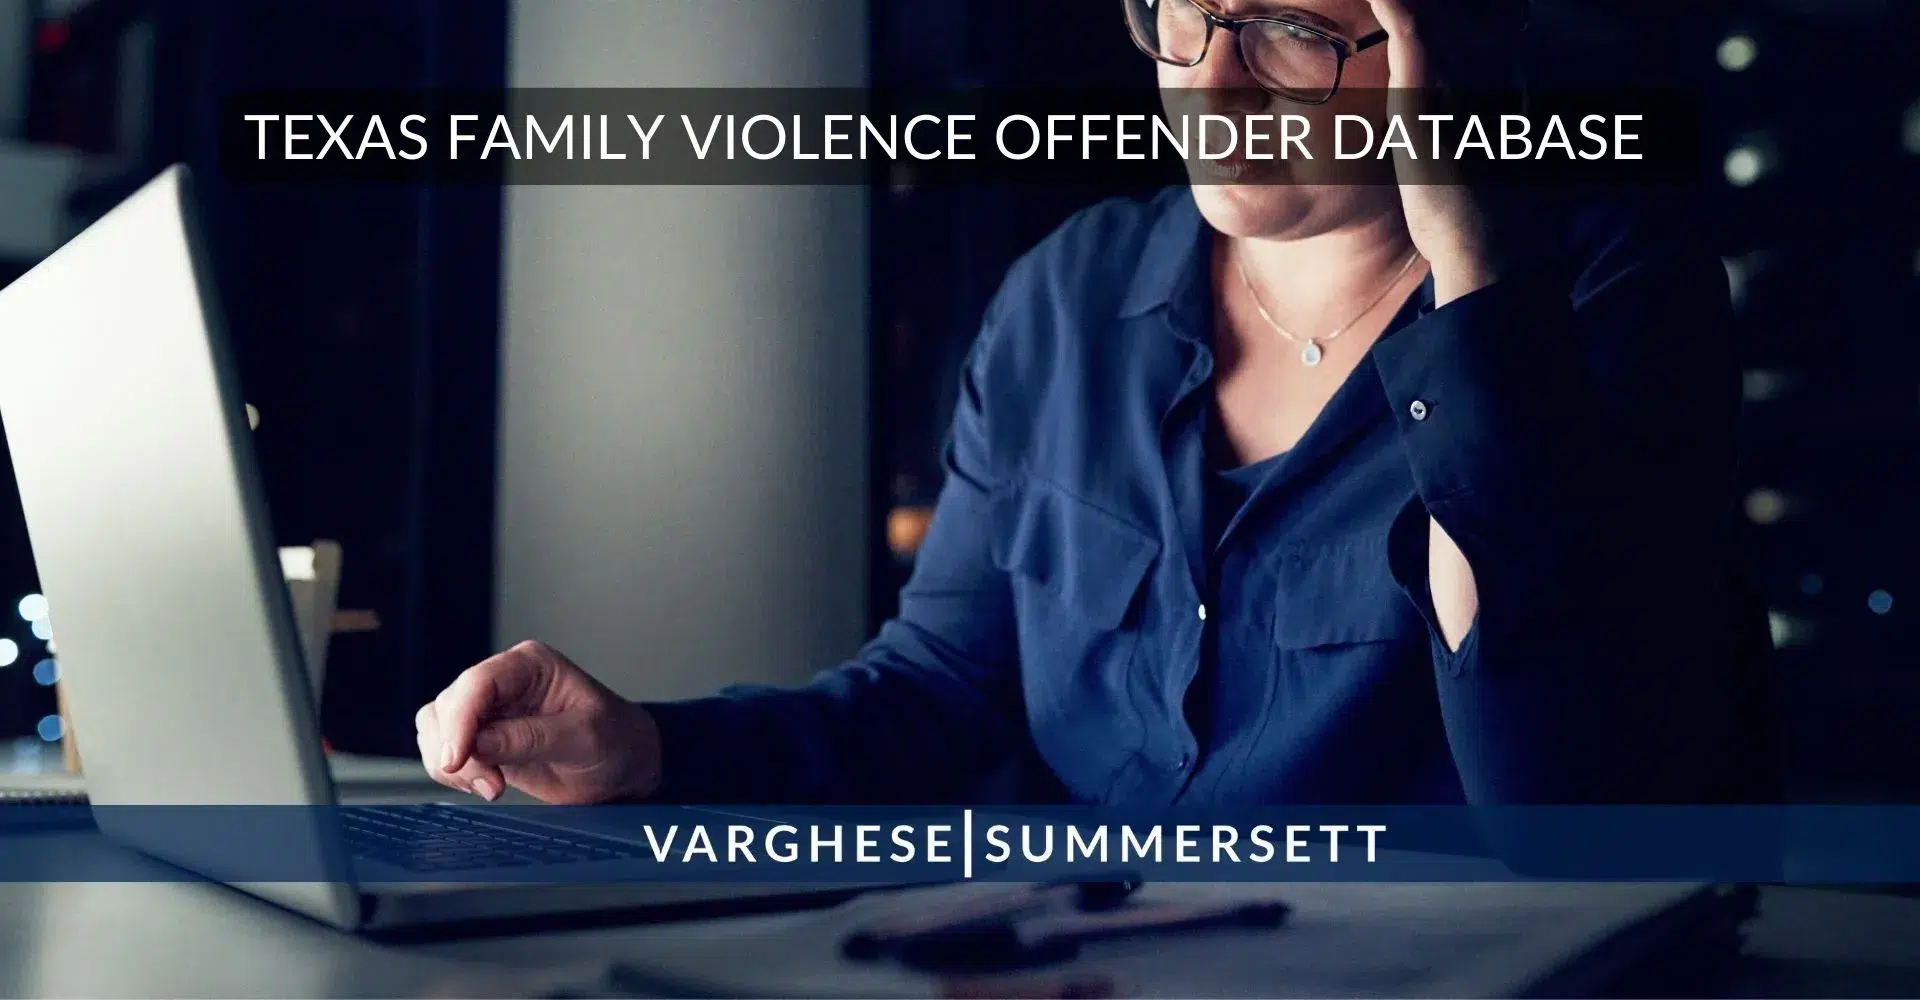 Base de datos de agresores por violencia familiar de Texas